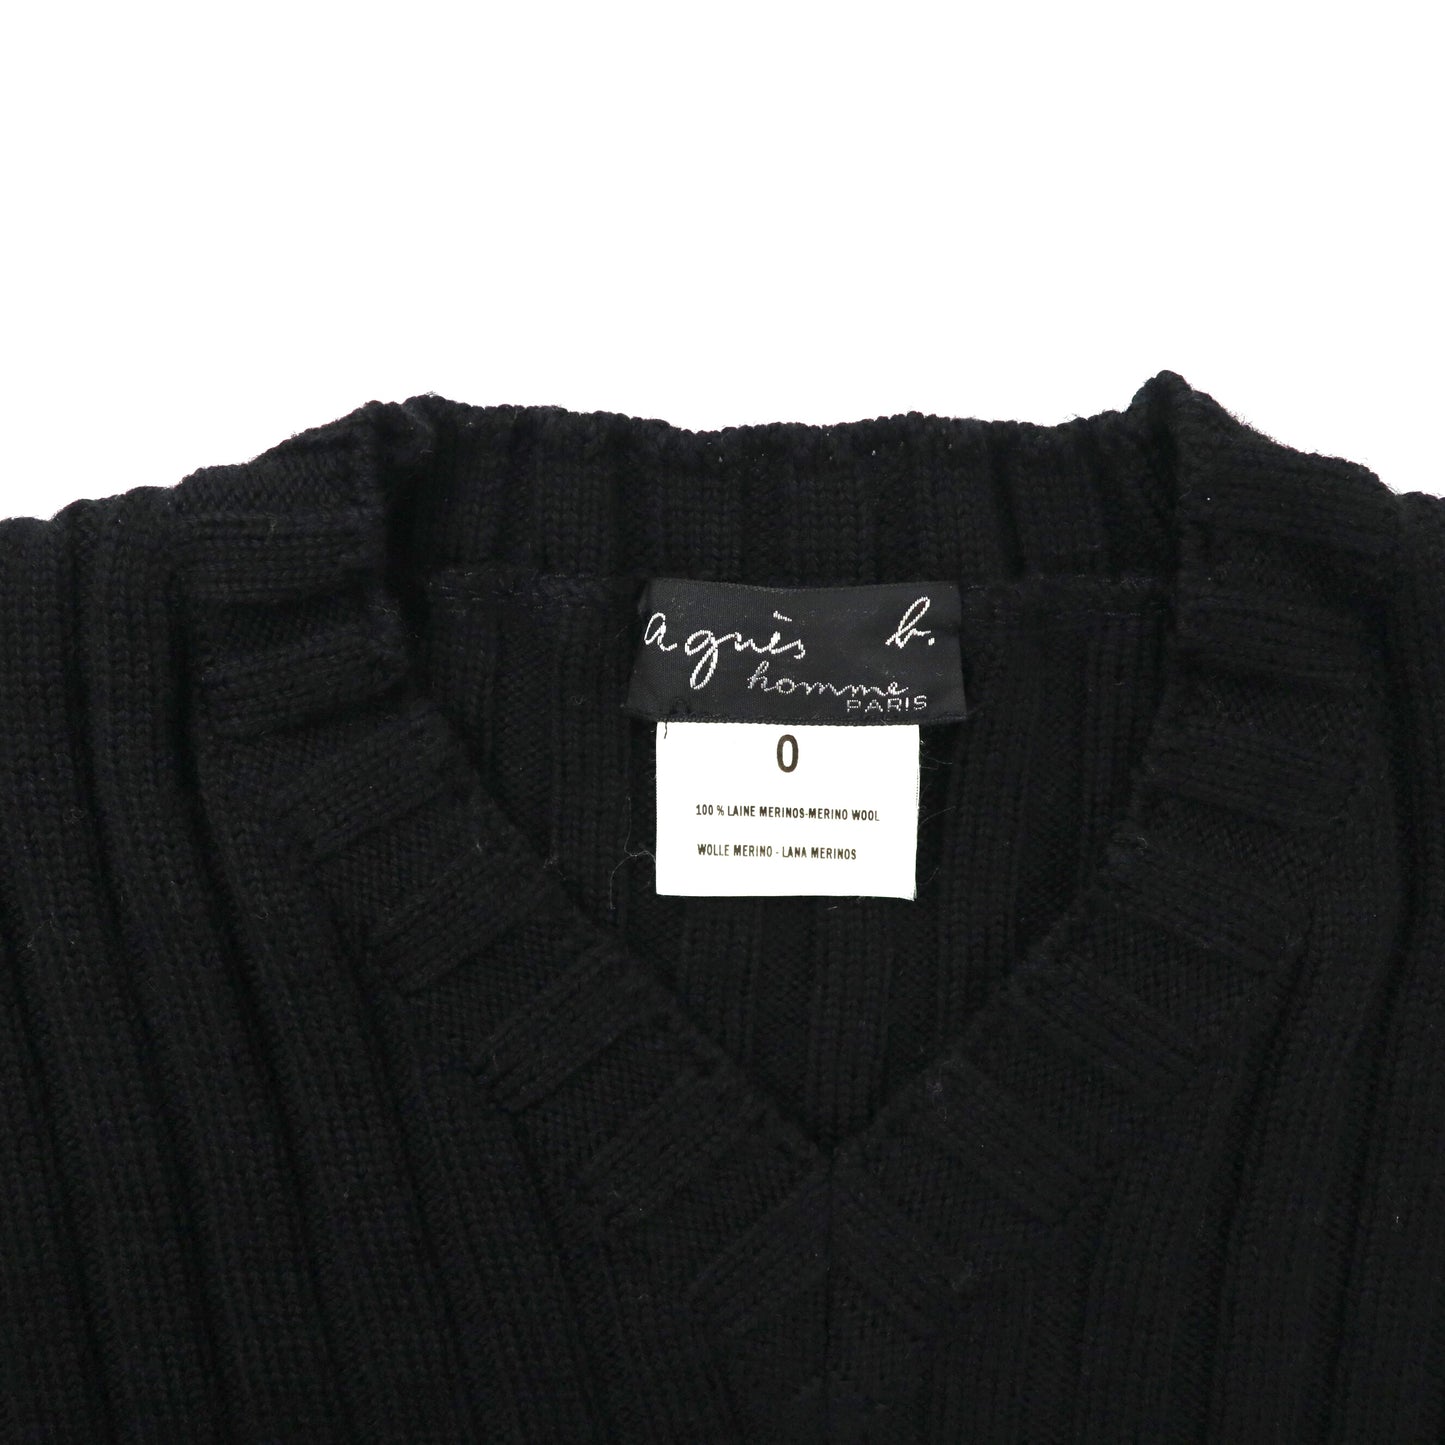 agnes b. homme Vネックリブニット セーター 0 ブラック メリノウール フランス製